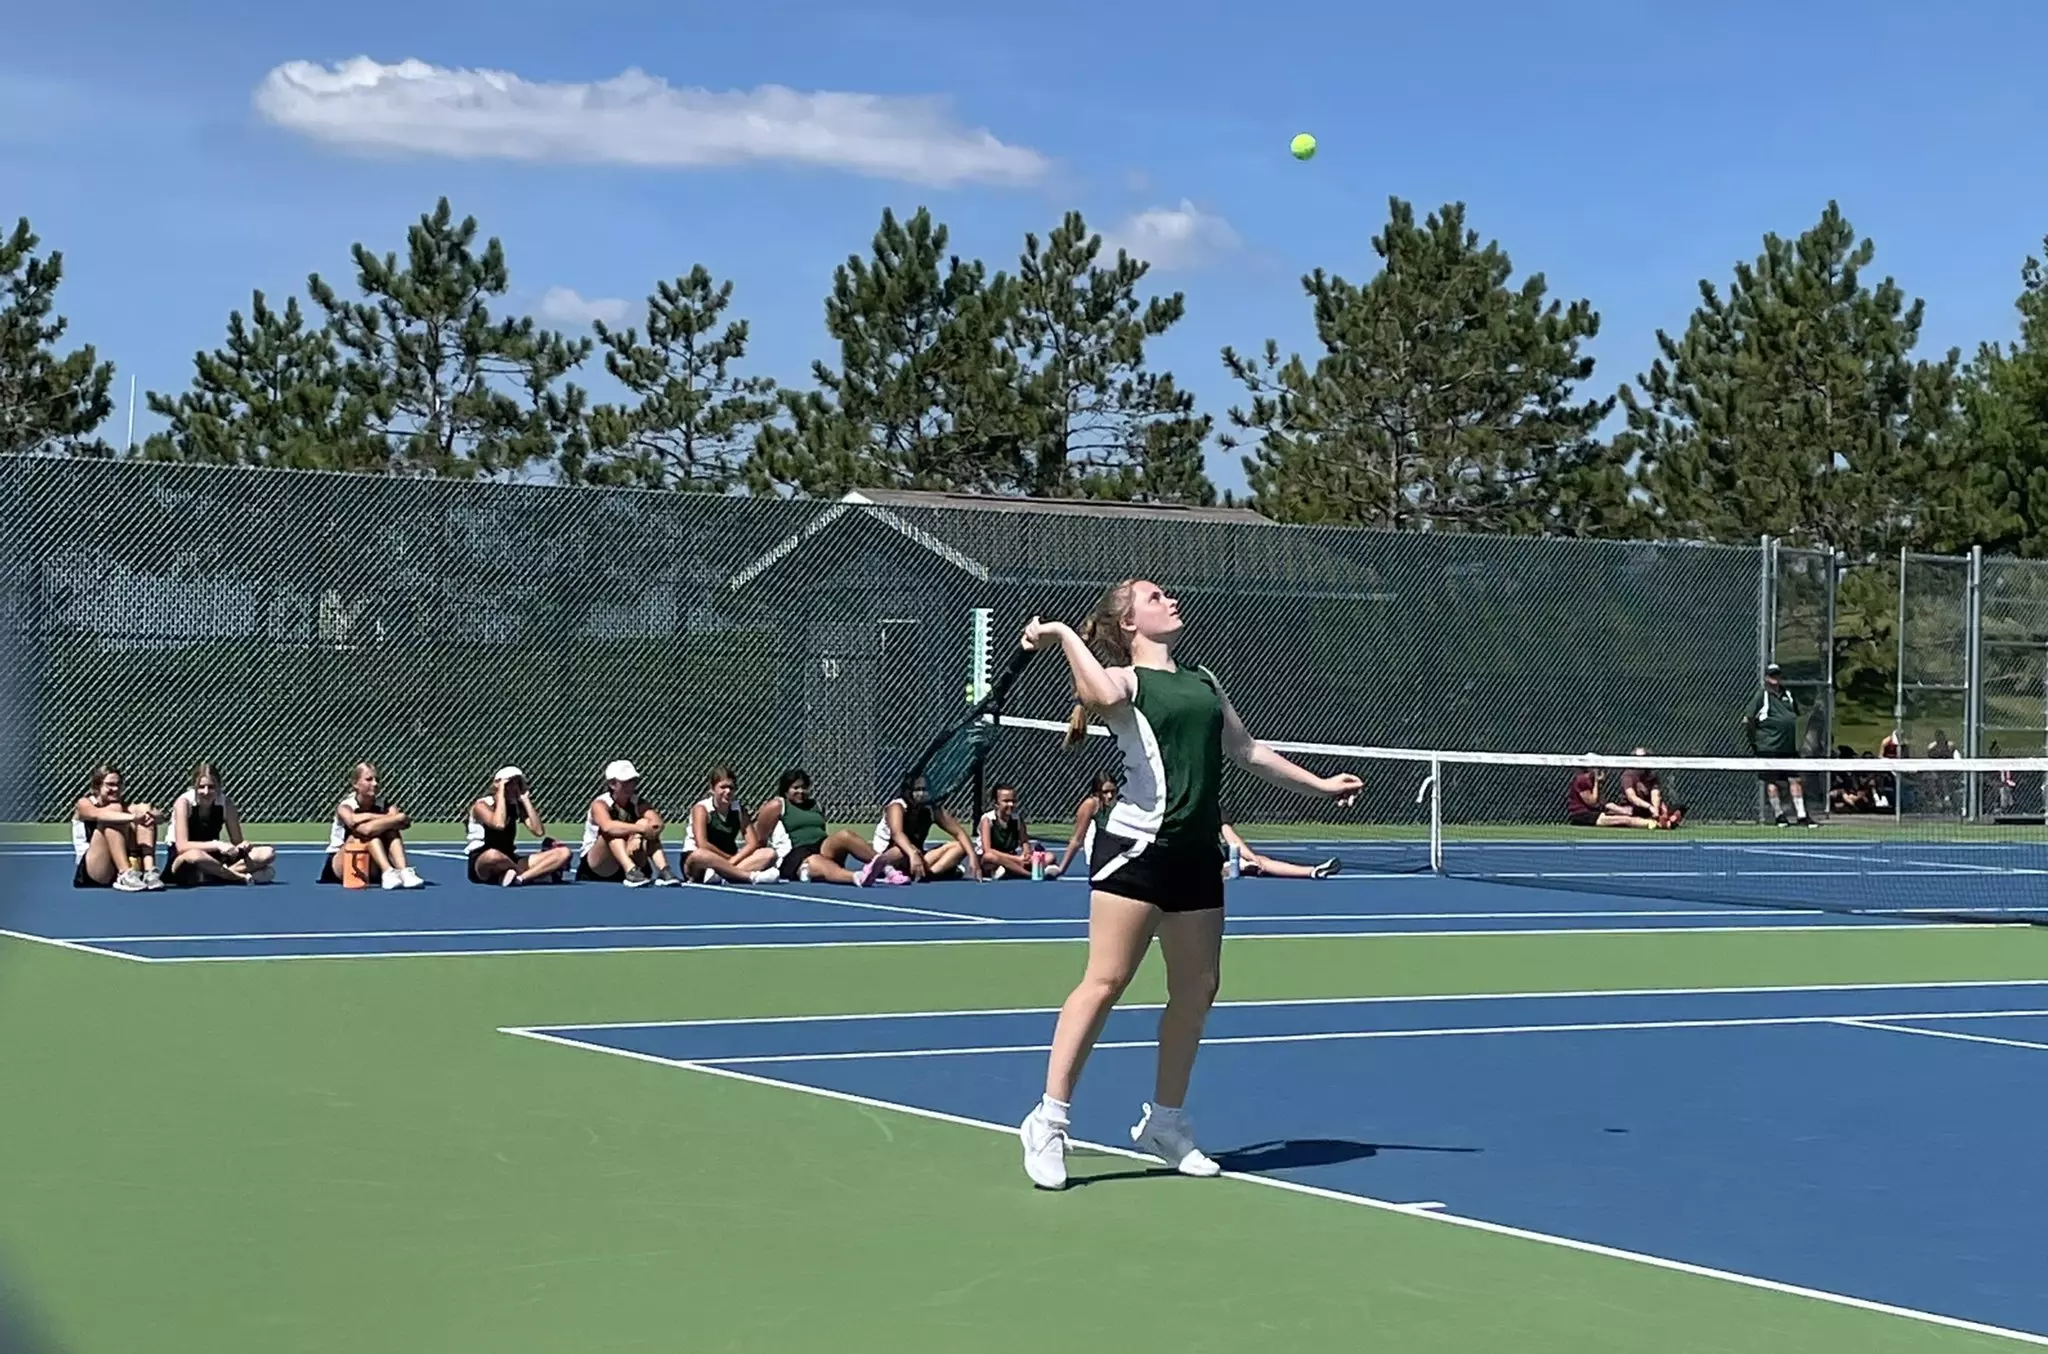 Minnesota high school girls tennis: Is 2023 Rochester Mayo's year?